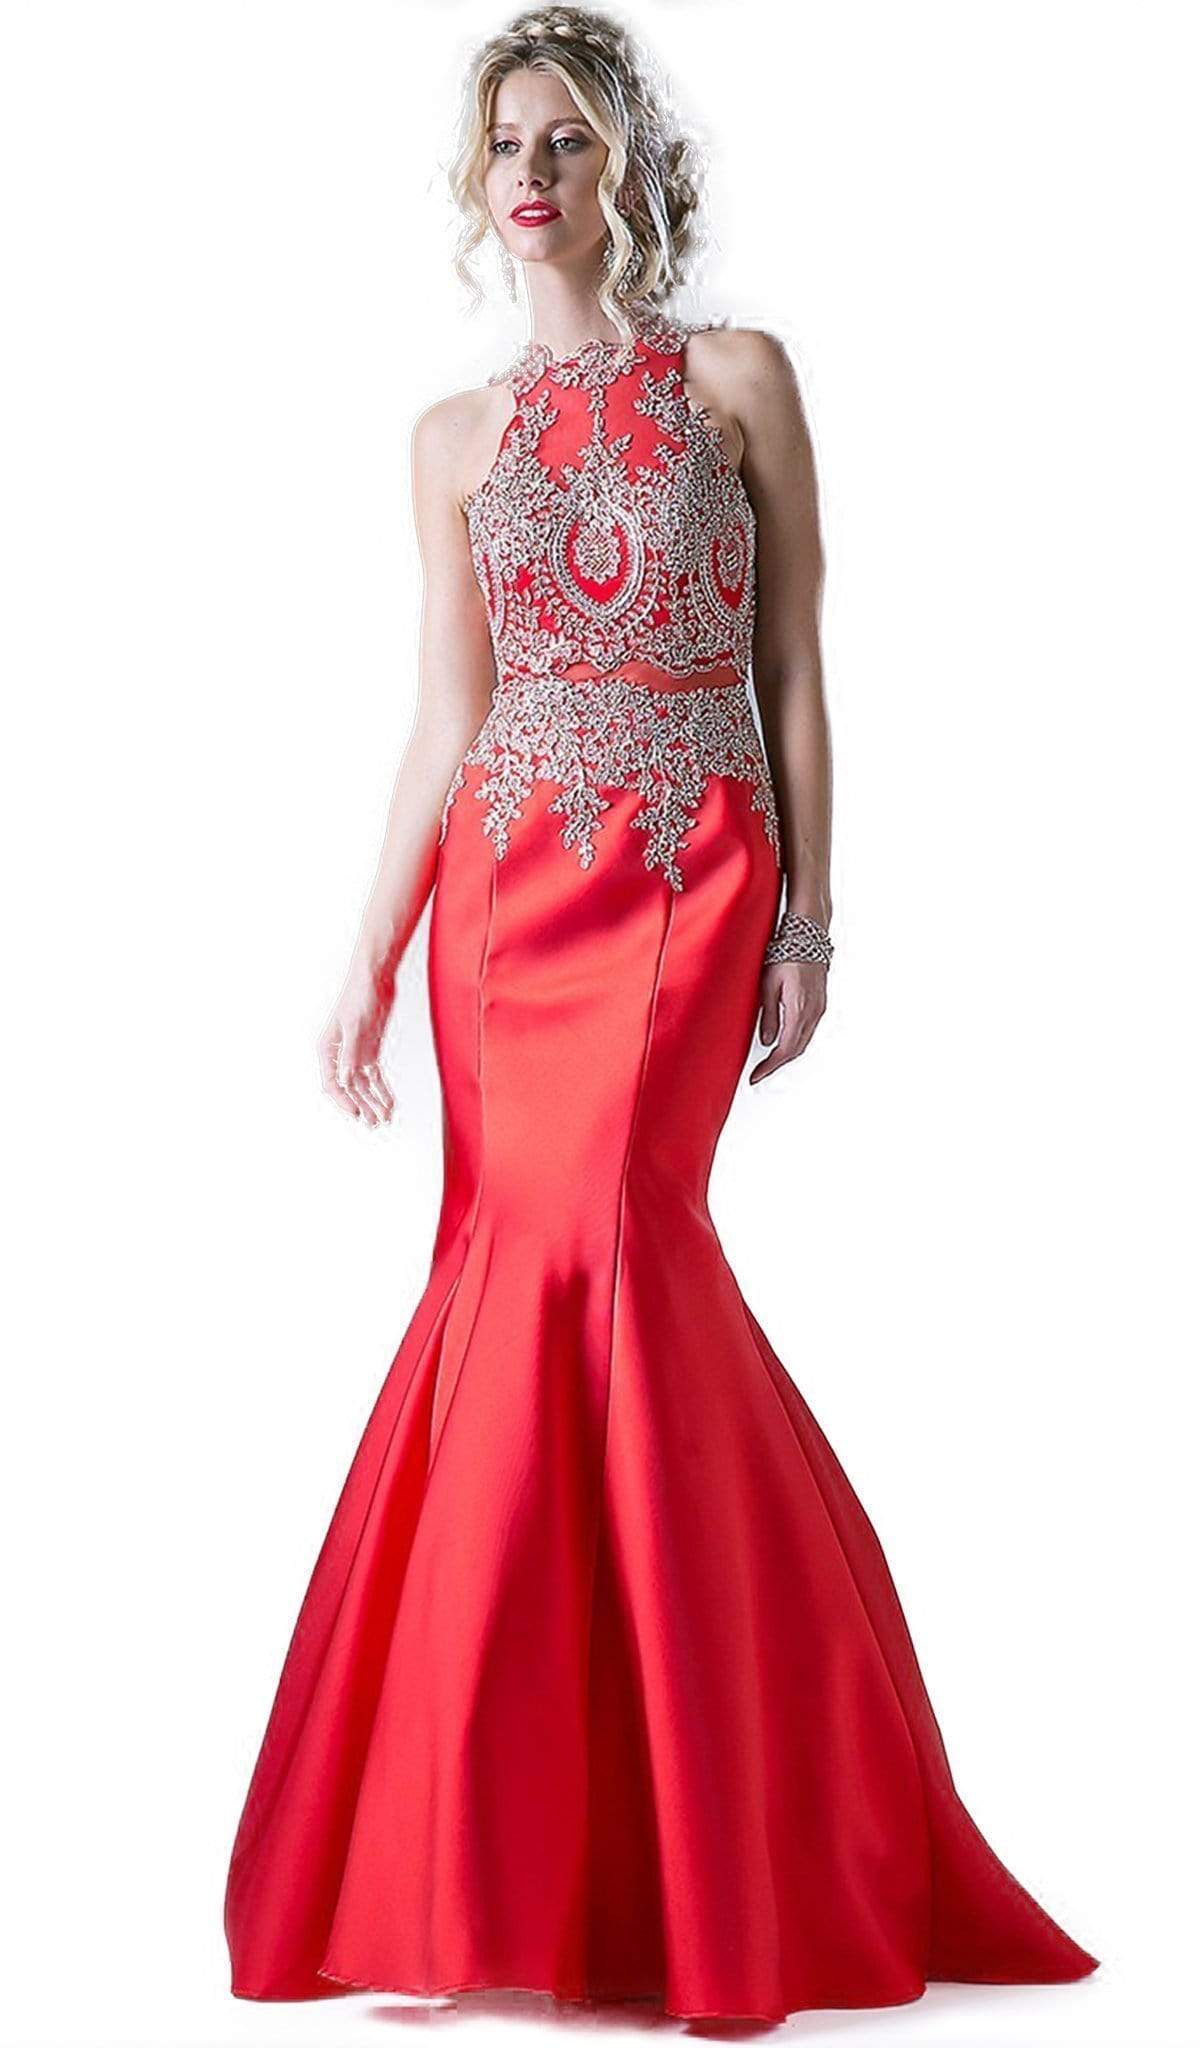 Cinderella Divine - Metallic Lace Adorned High Neck Mermaid Evening Gown
